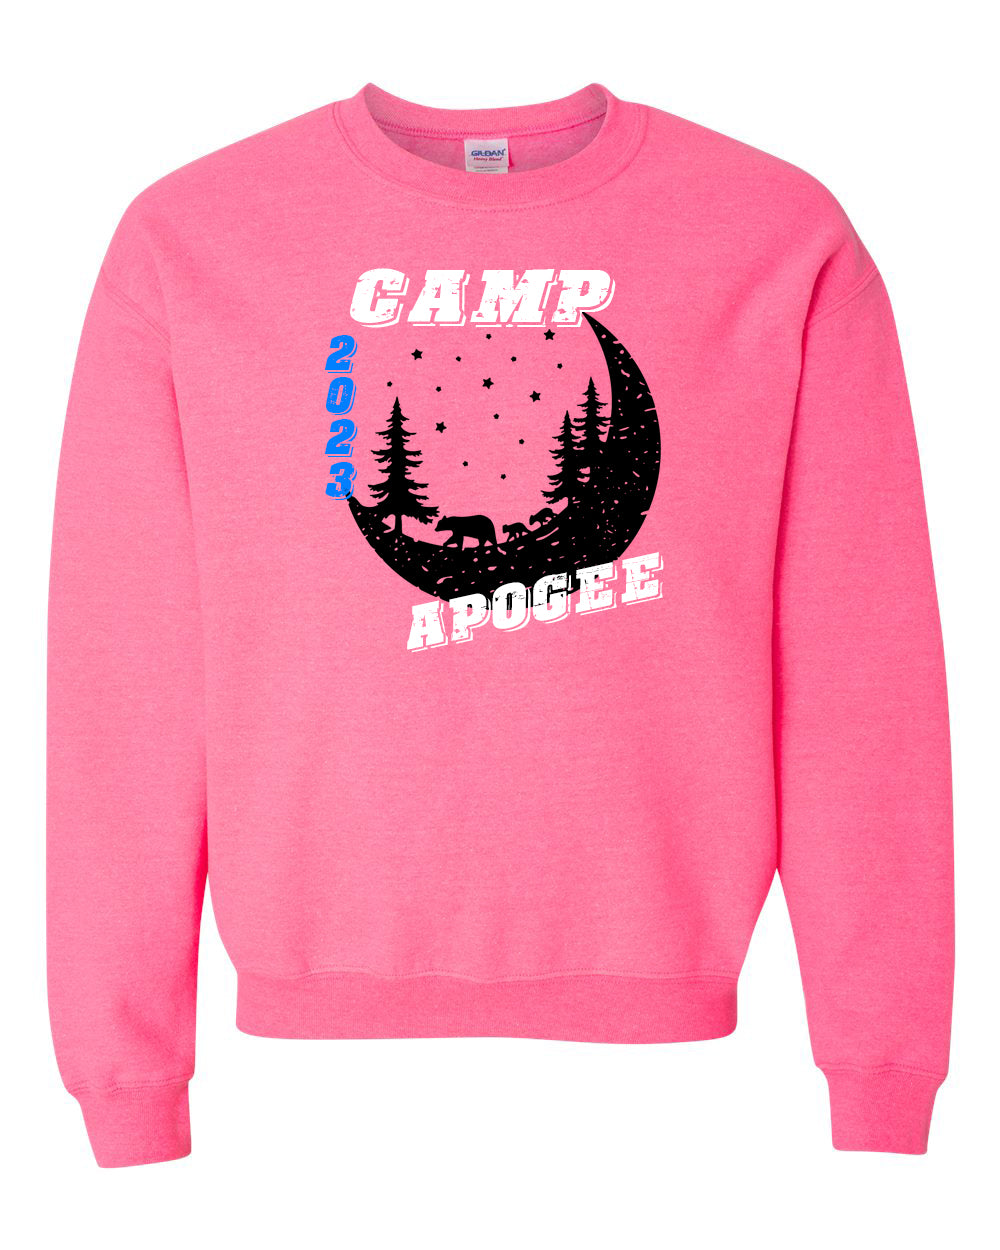 Apogee Camp Design 1 non hooded sweatshirt